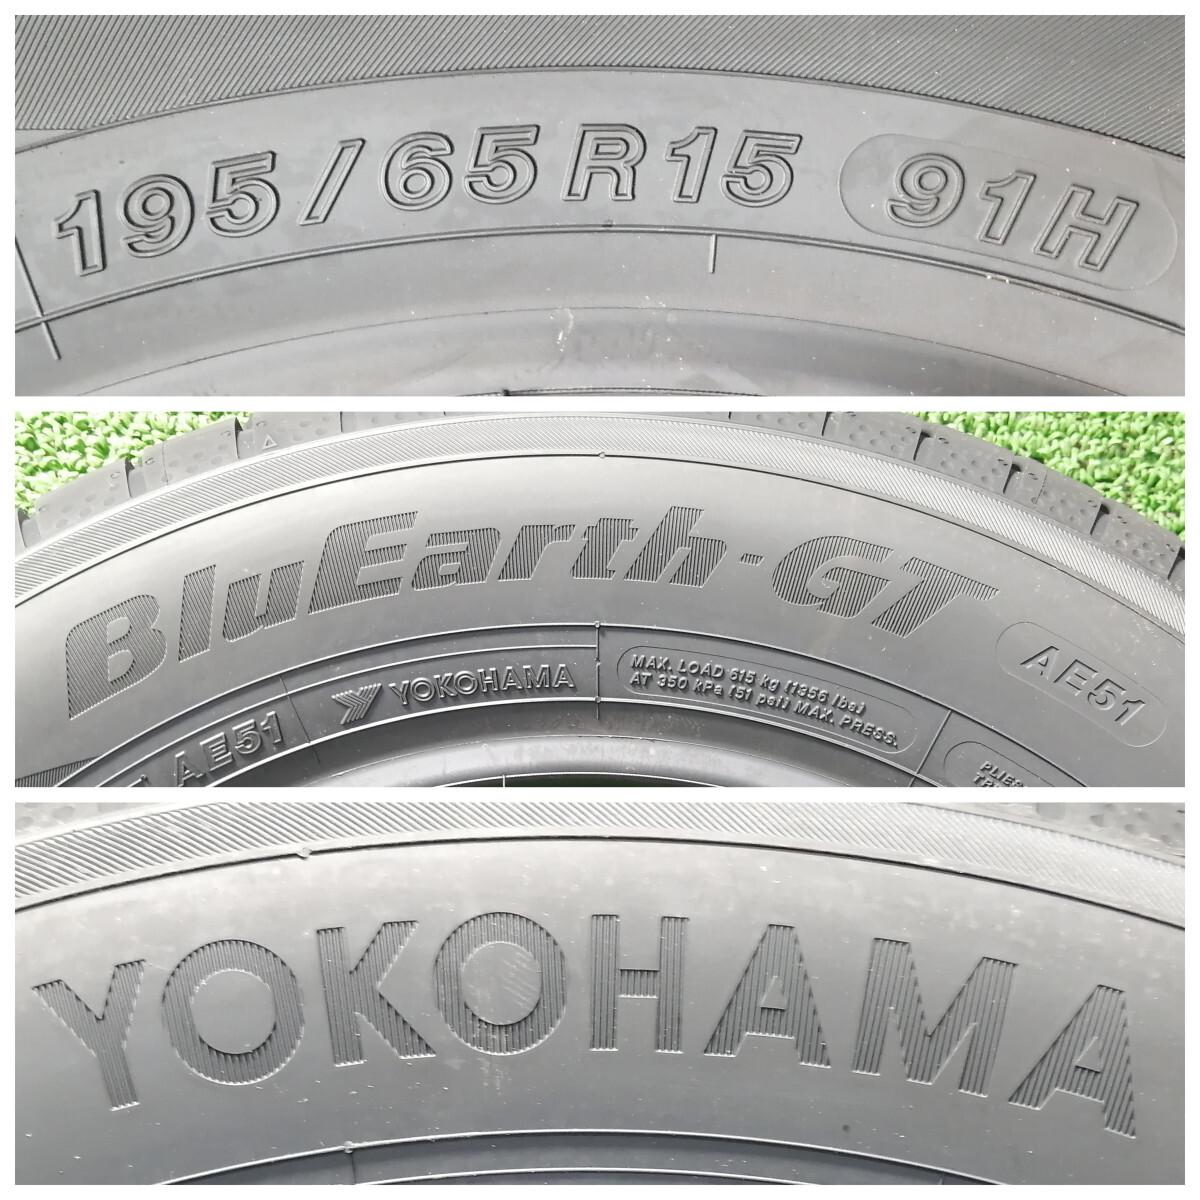 195/65R15 91H Yokohama BluEarth-GT AE51 新品 サマータイヤ 4本セット 2023年製 送料無料 ヨコハマタイヤ 195/65/15の画像3